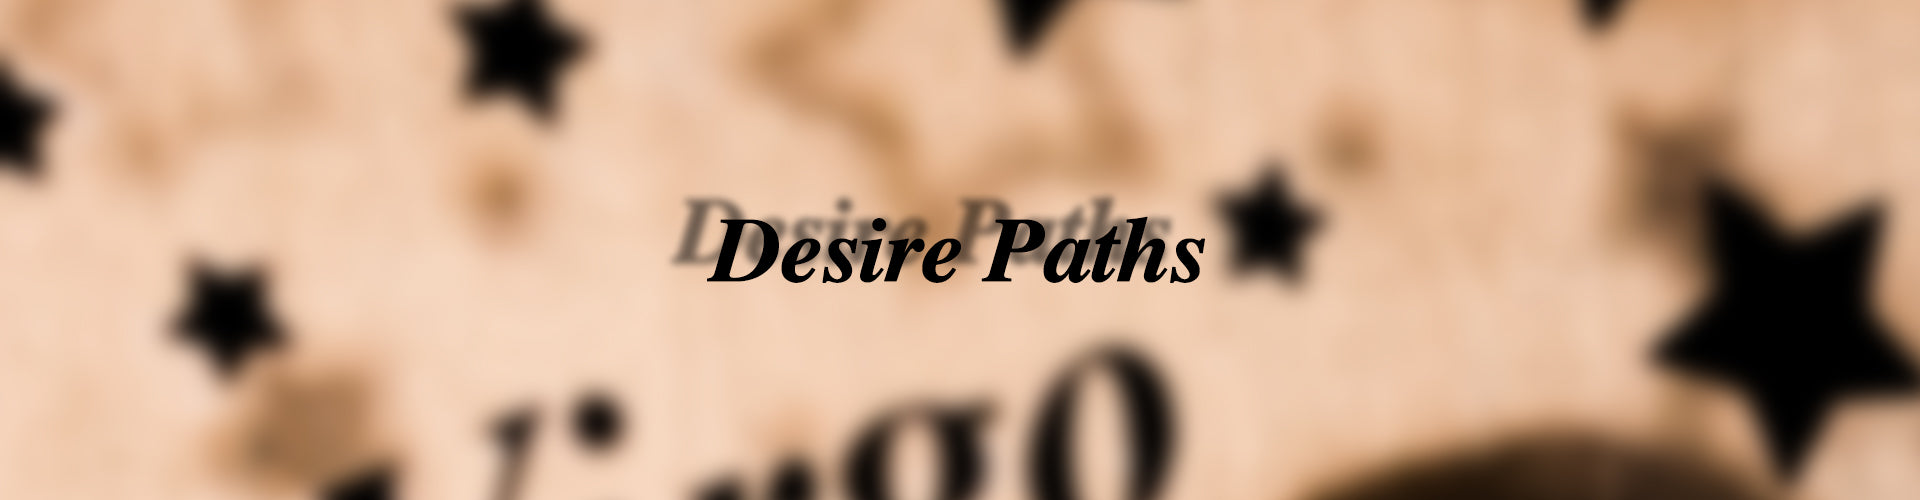 AW20: Desire Paths